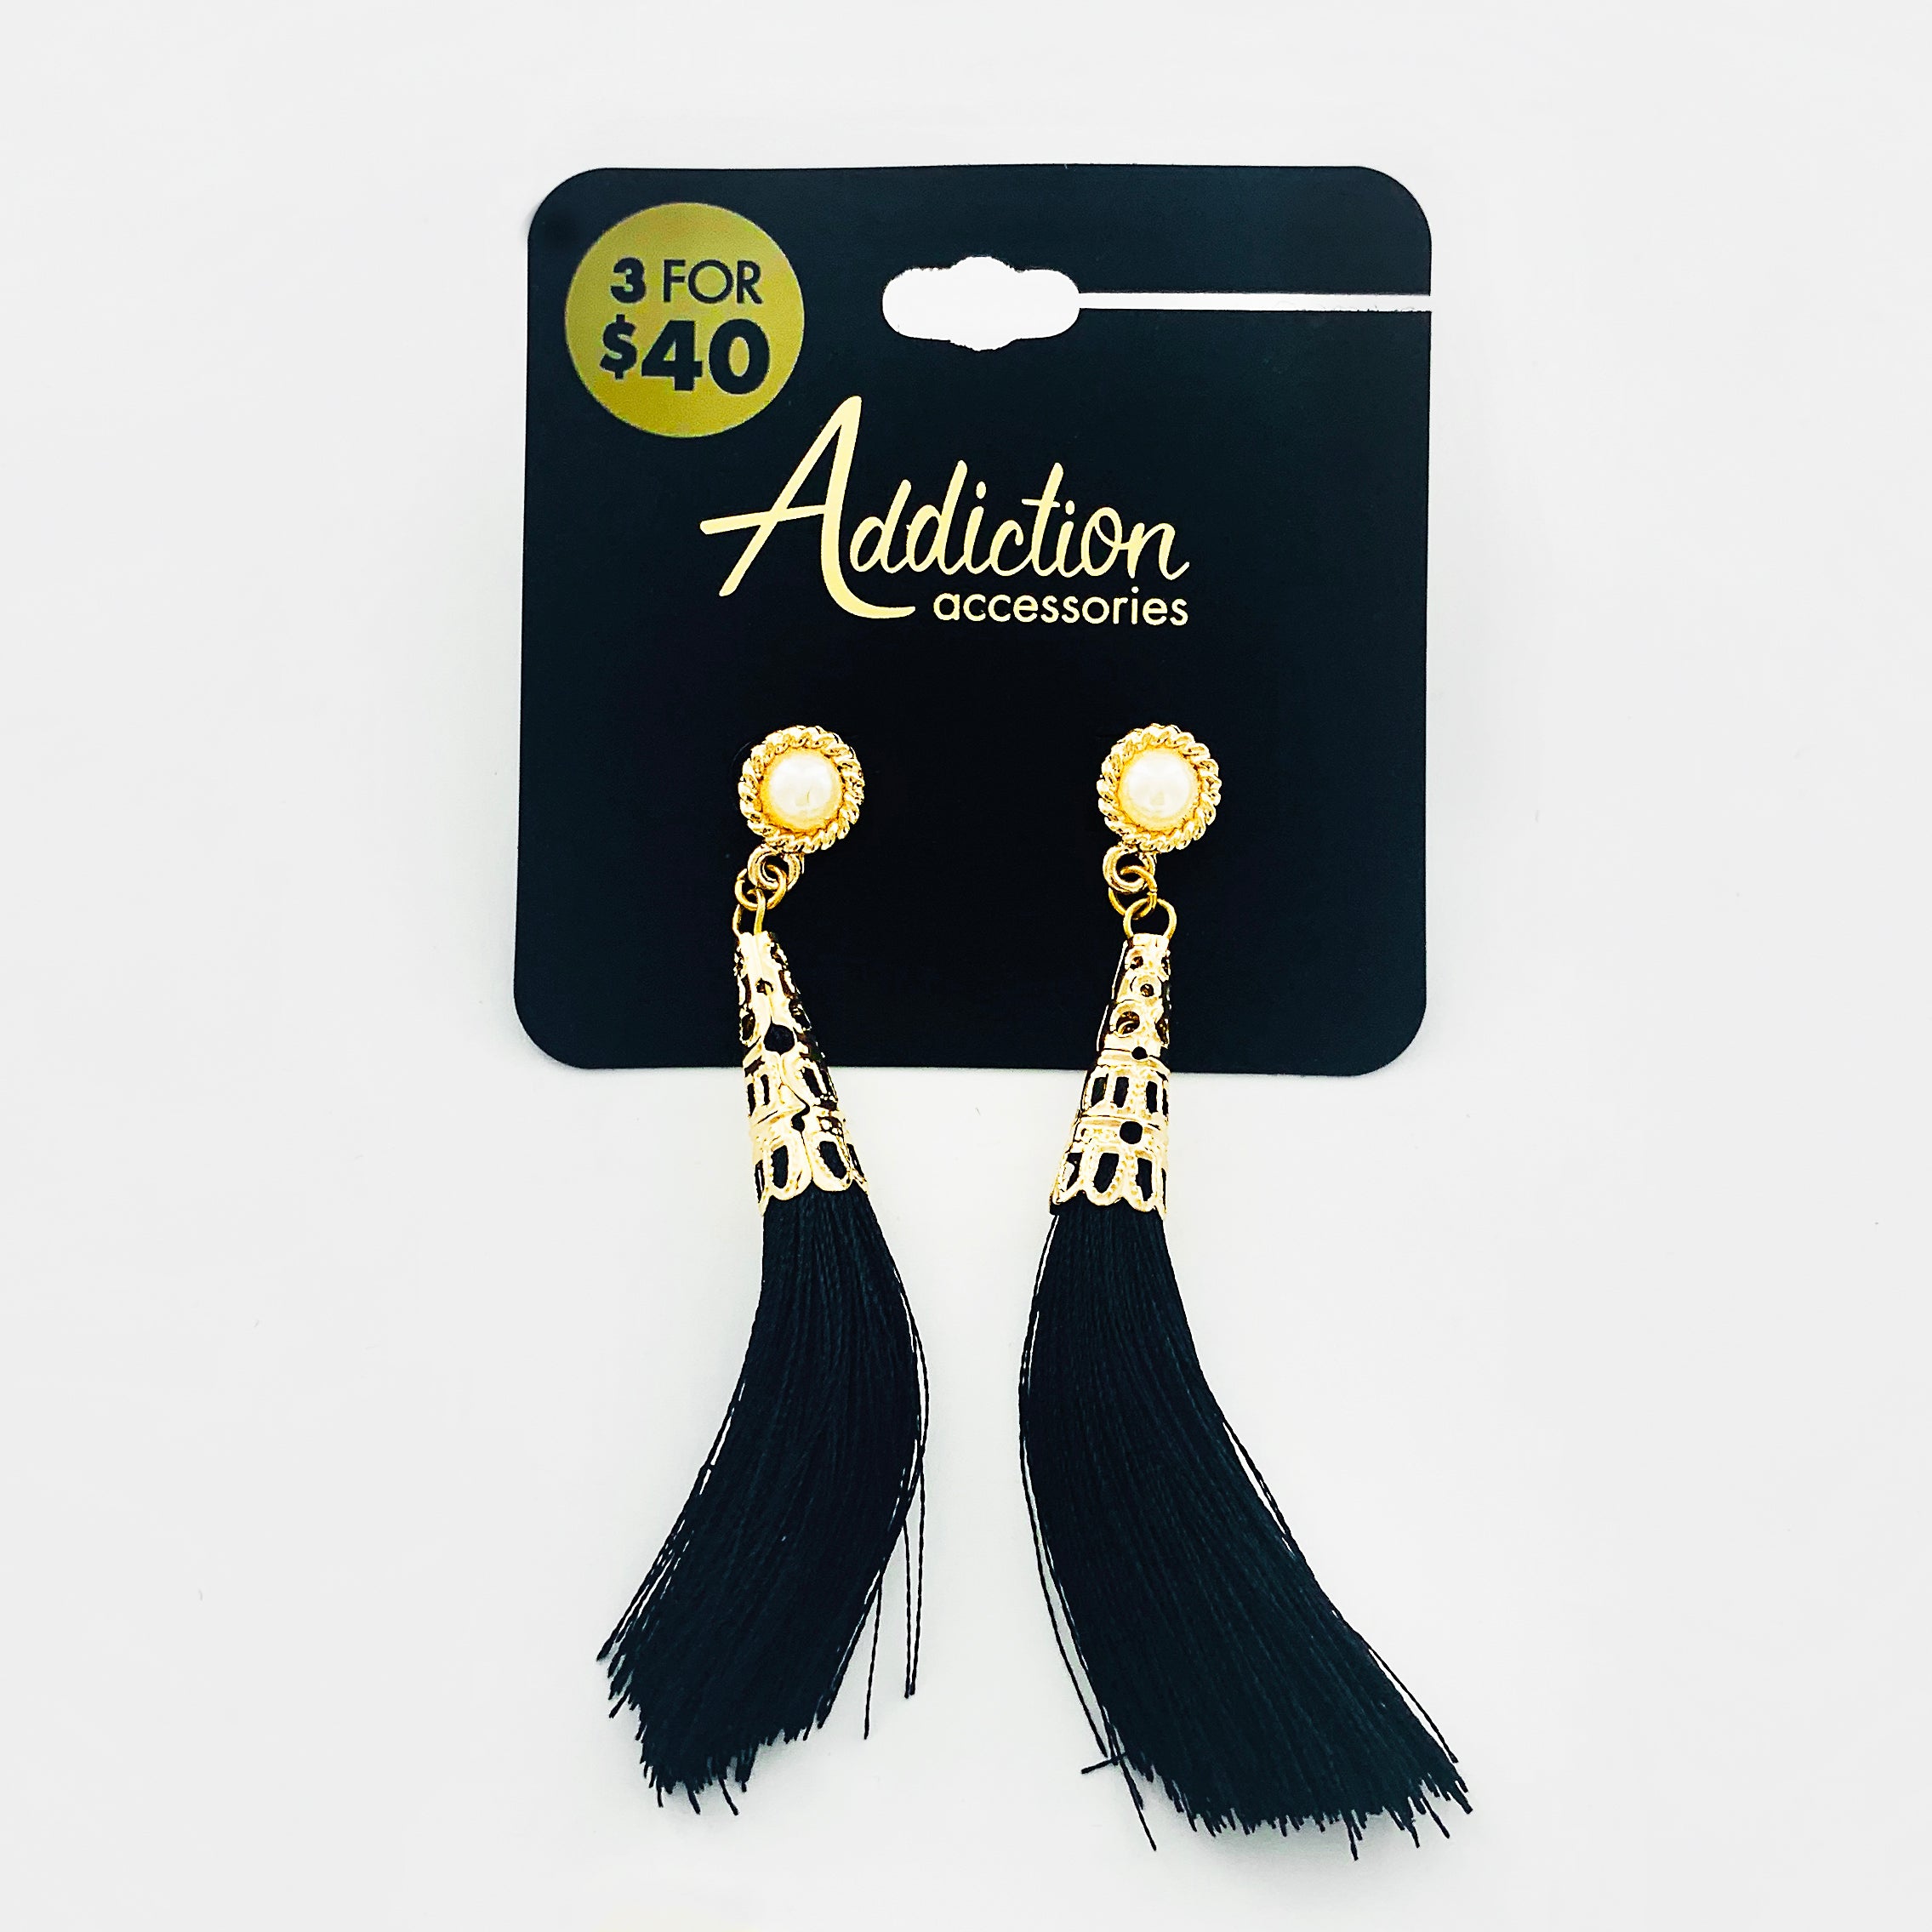 Gold earrings with black tassels